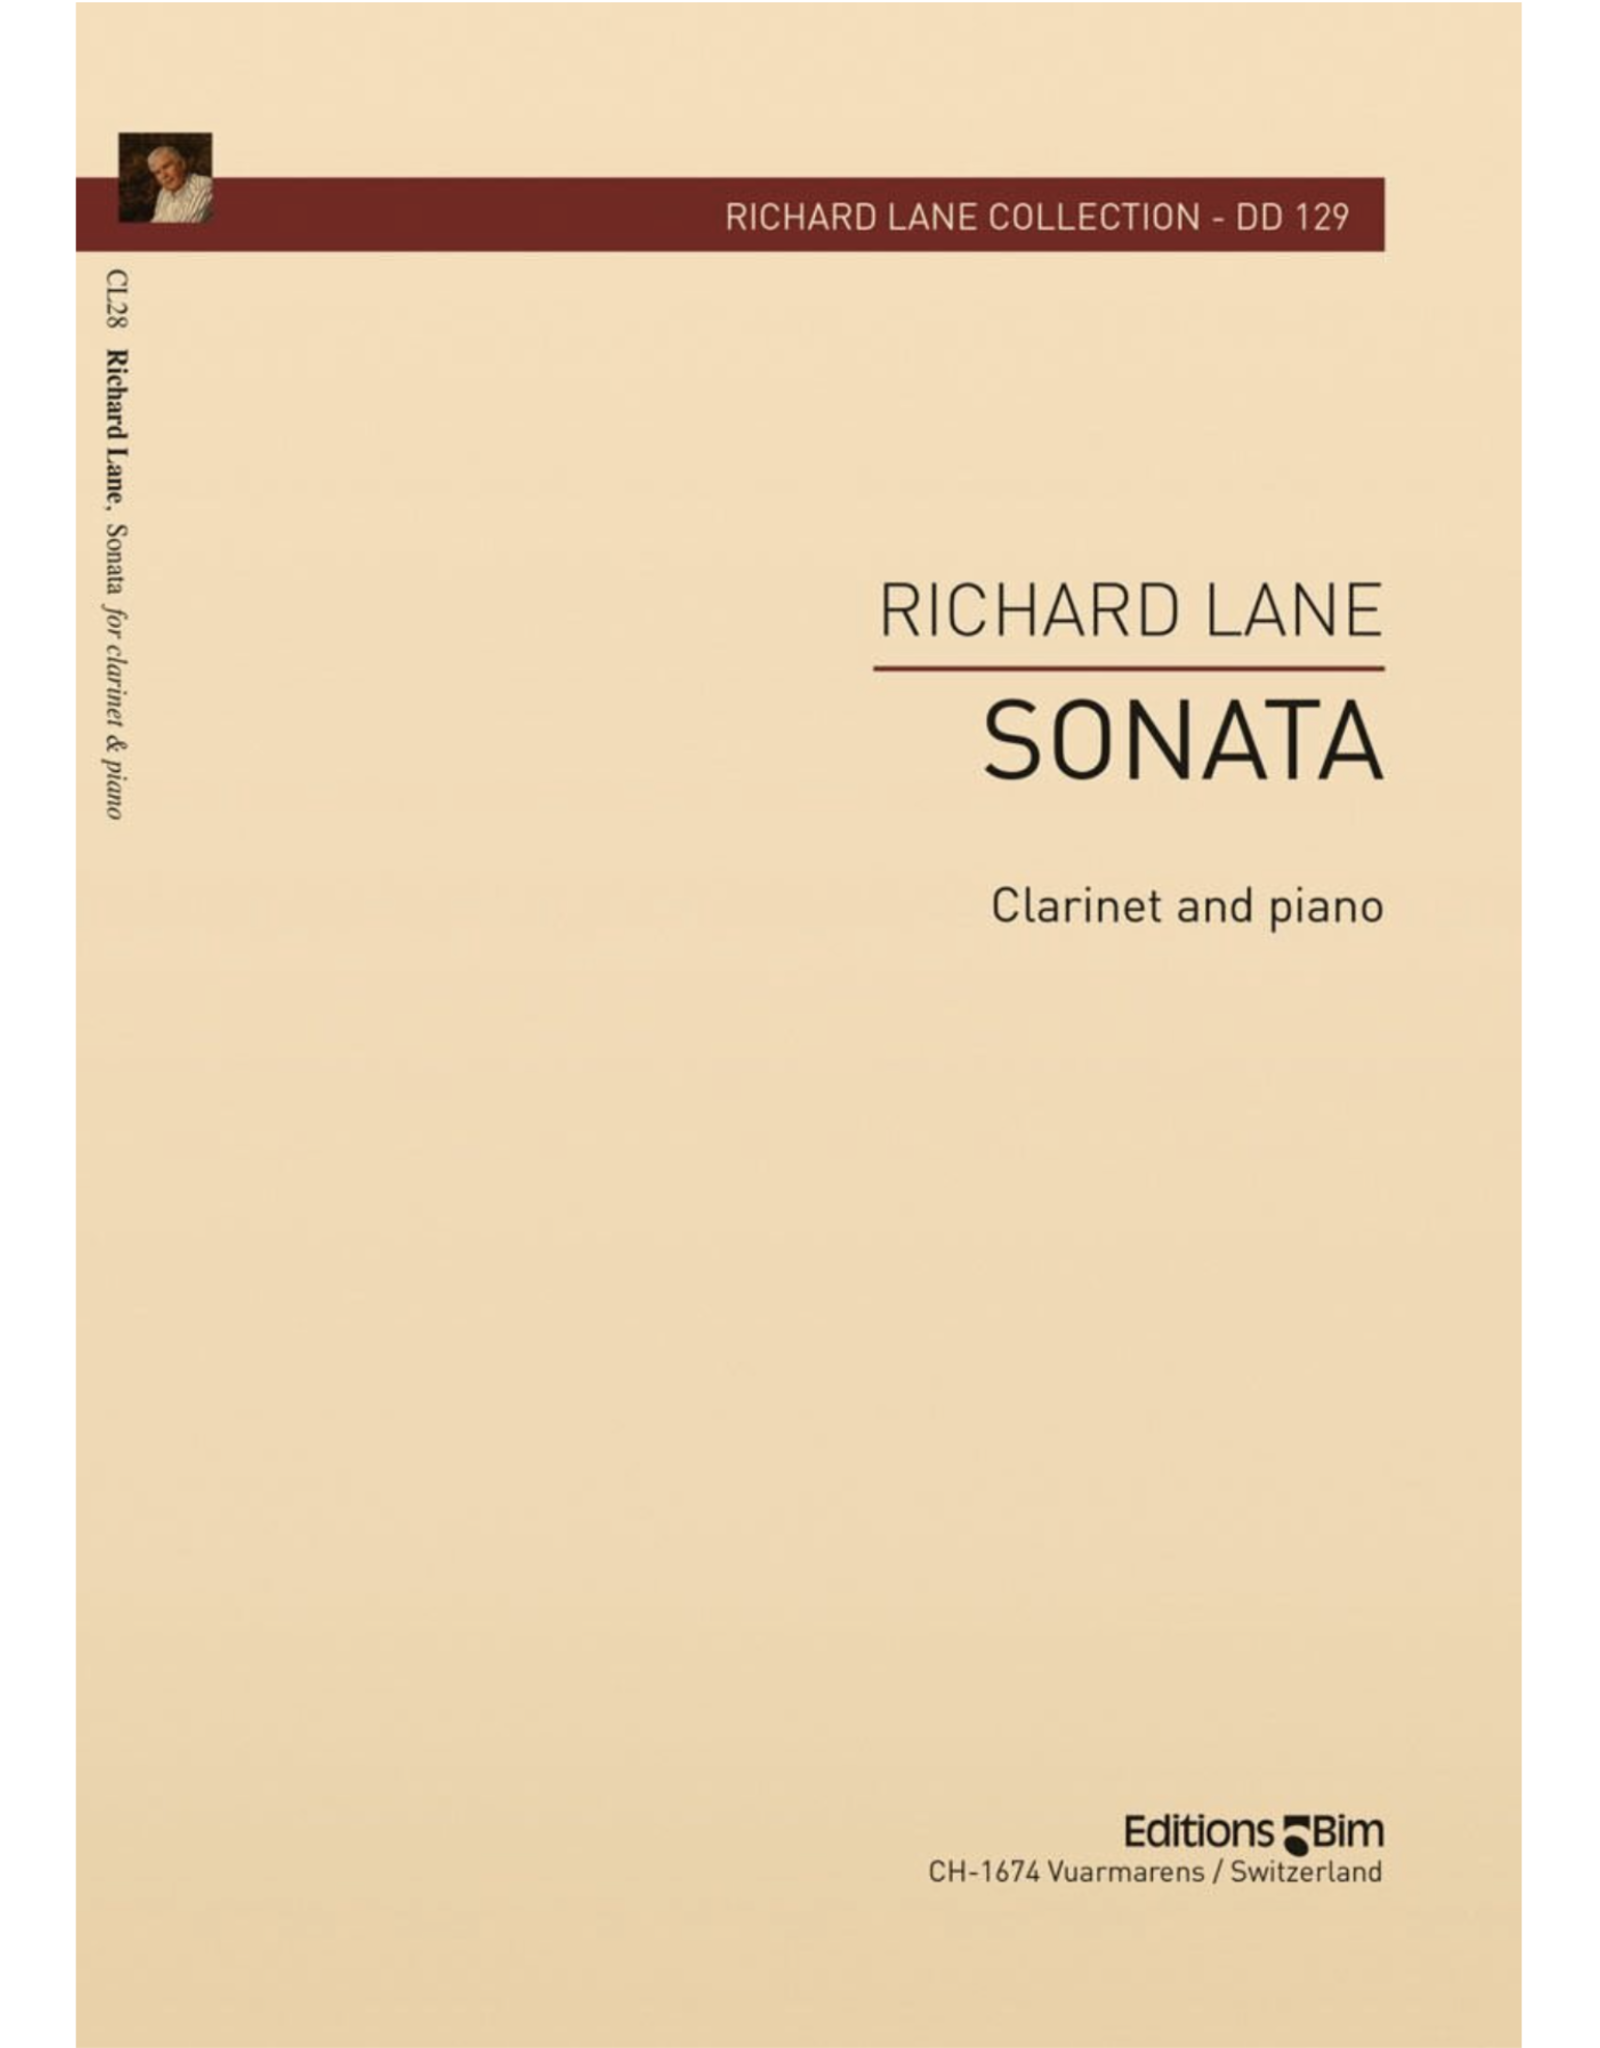 Generic Richard Lane - Sonata for Clarinet and Piano